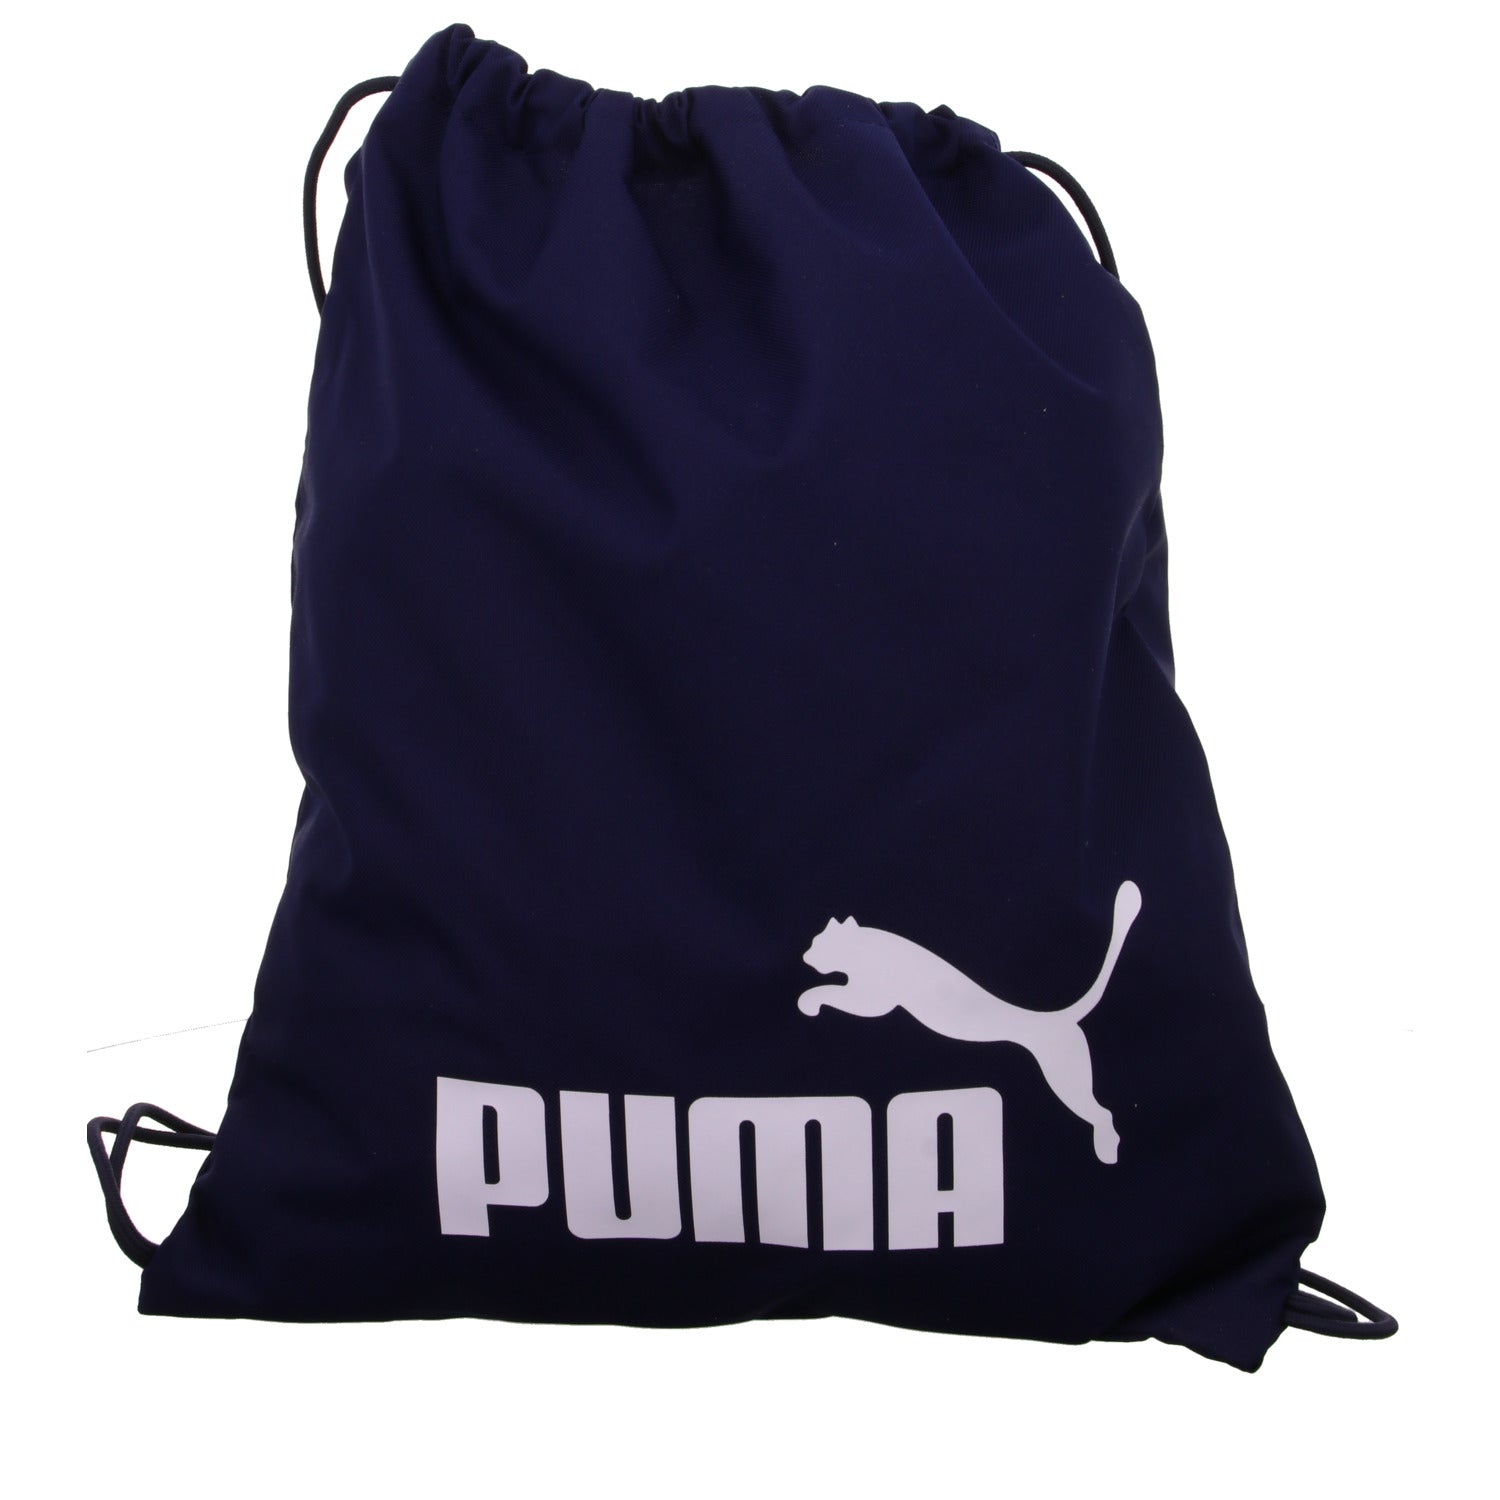 Puma Schuhbeutel Phase Gym Sack